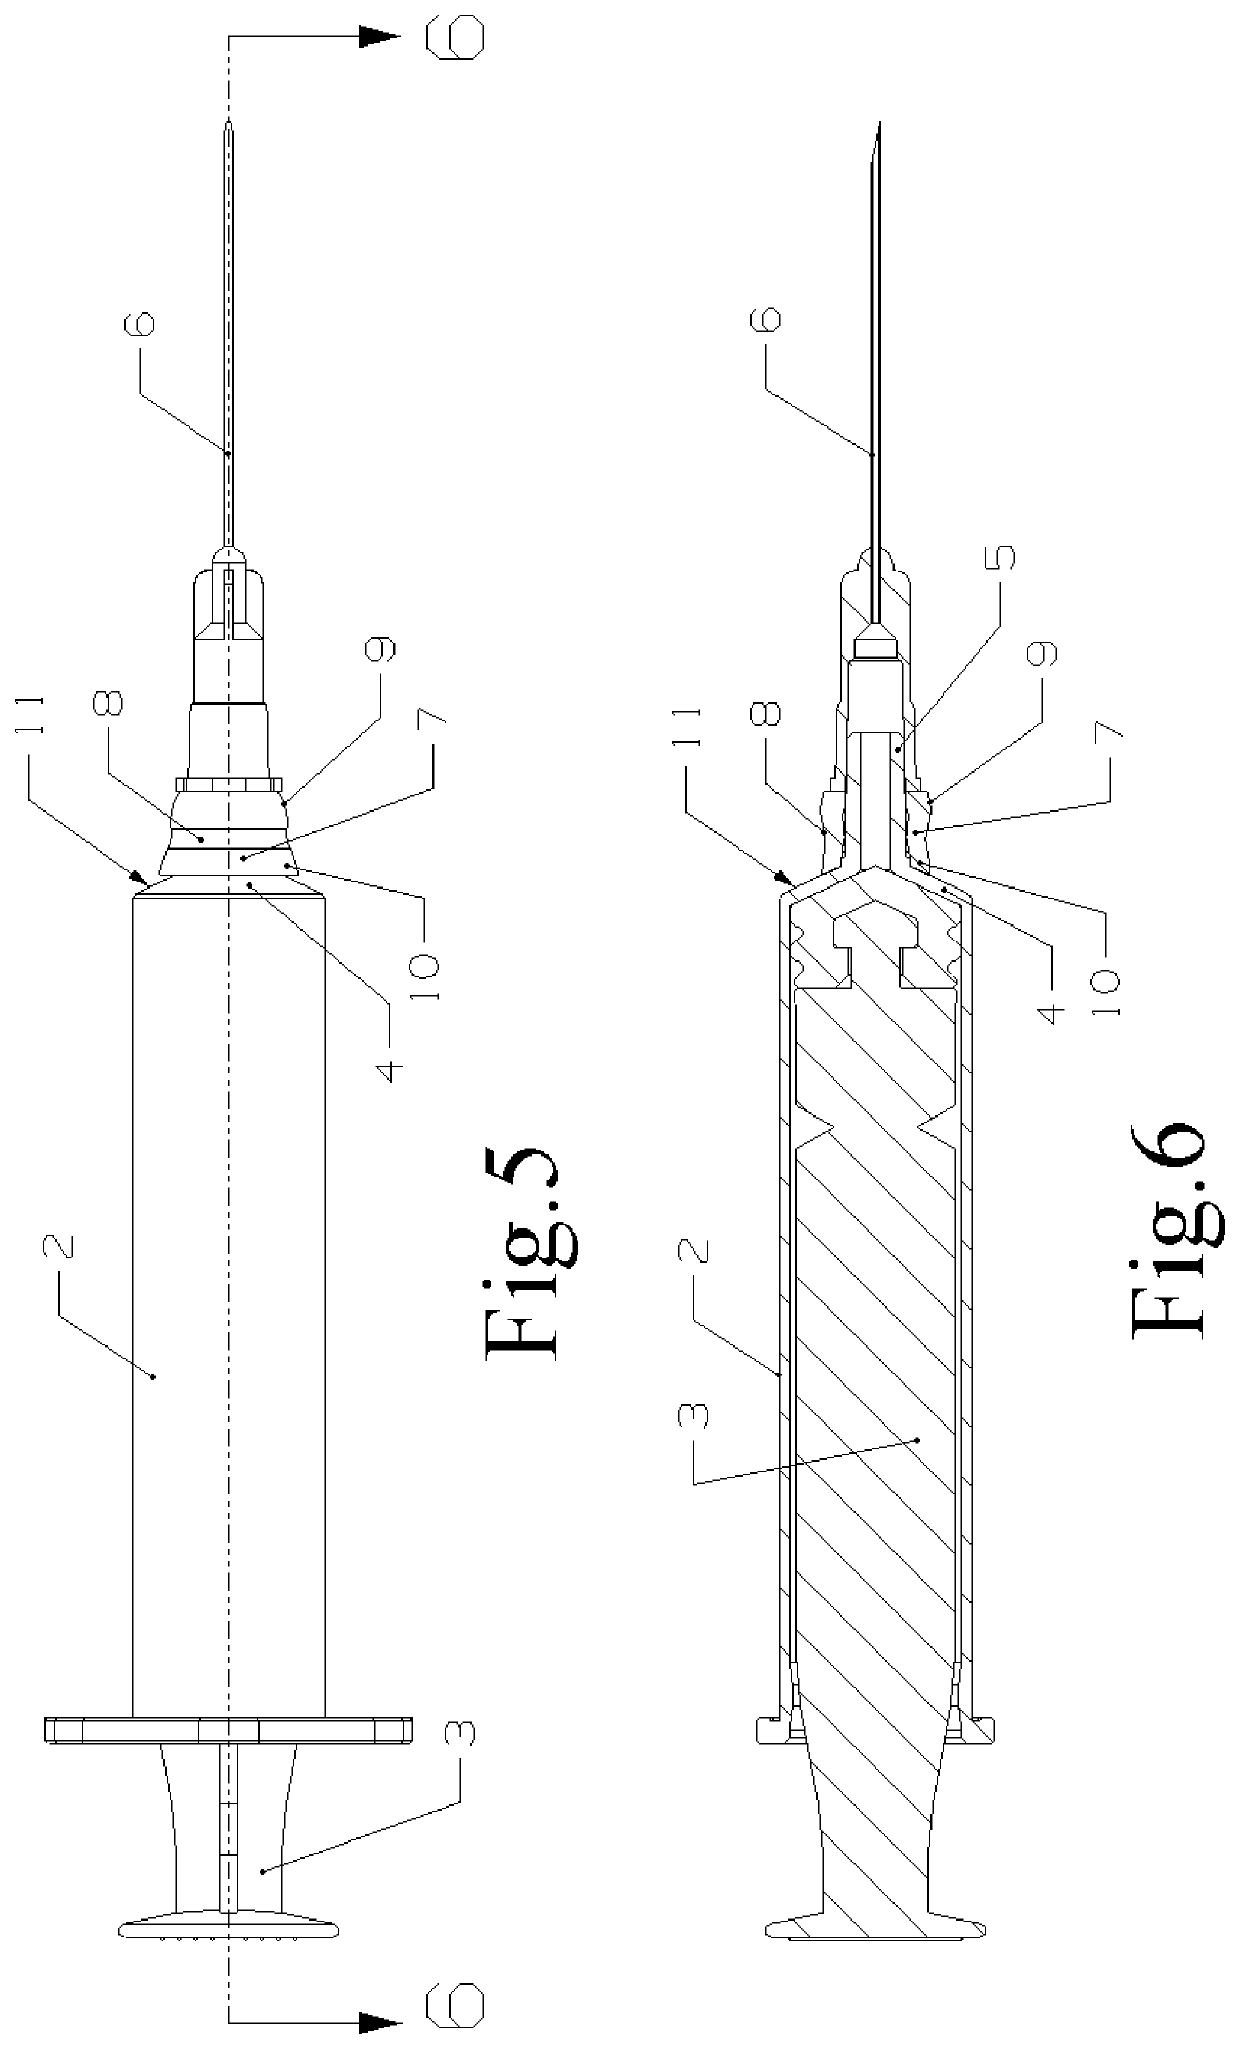 Medical syringe for preventing needle-stick injury